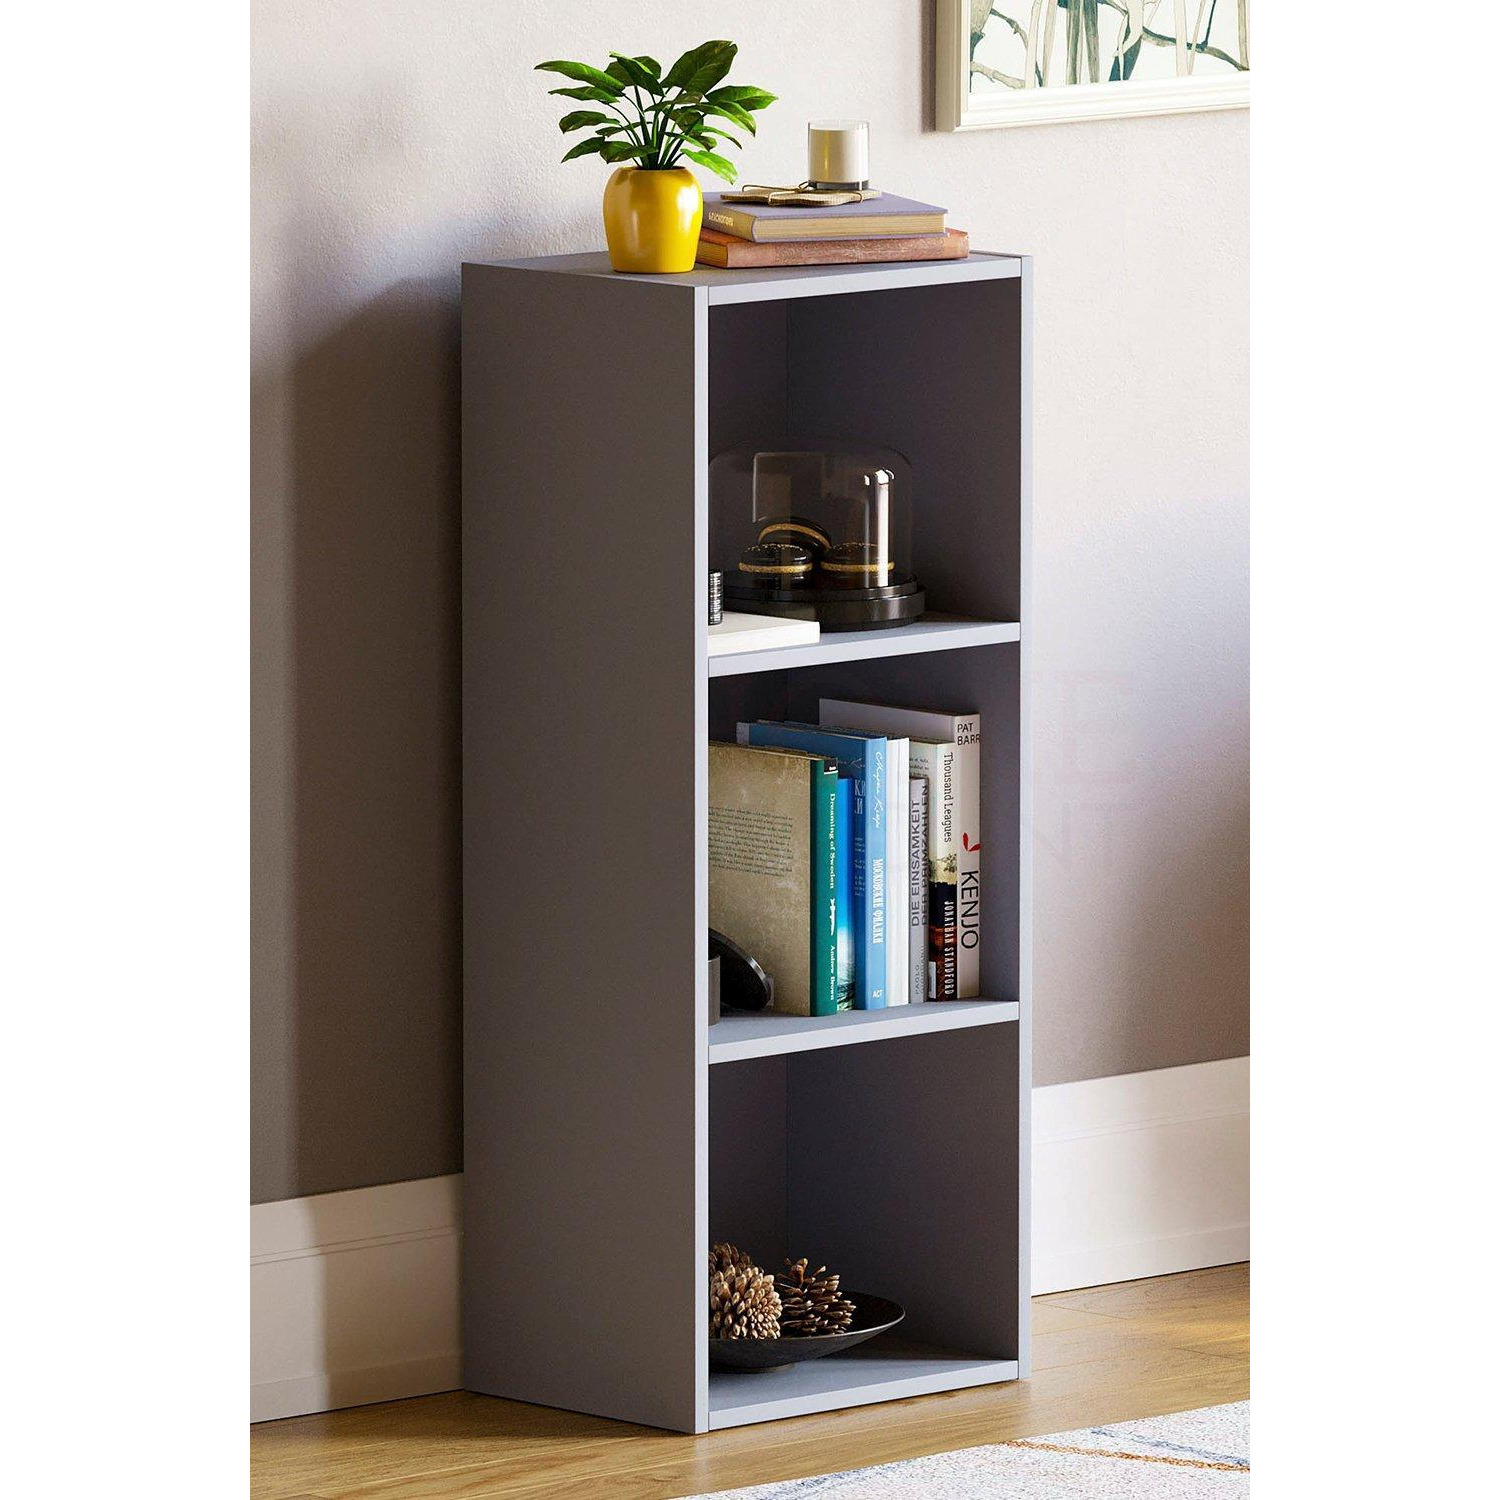 Vida Designs Oxford 3 Tier Cube Bookcase Storage 800 x 320 x 240 mm - image 1